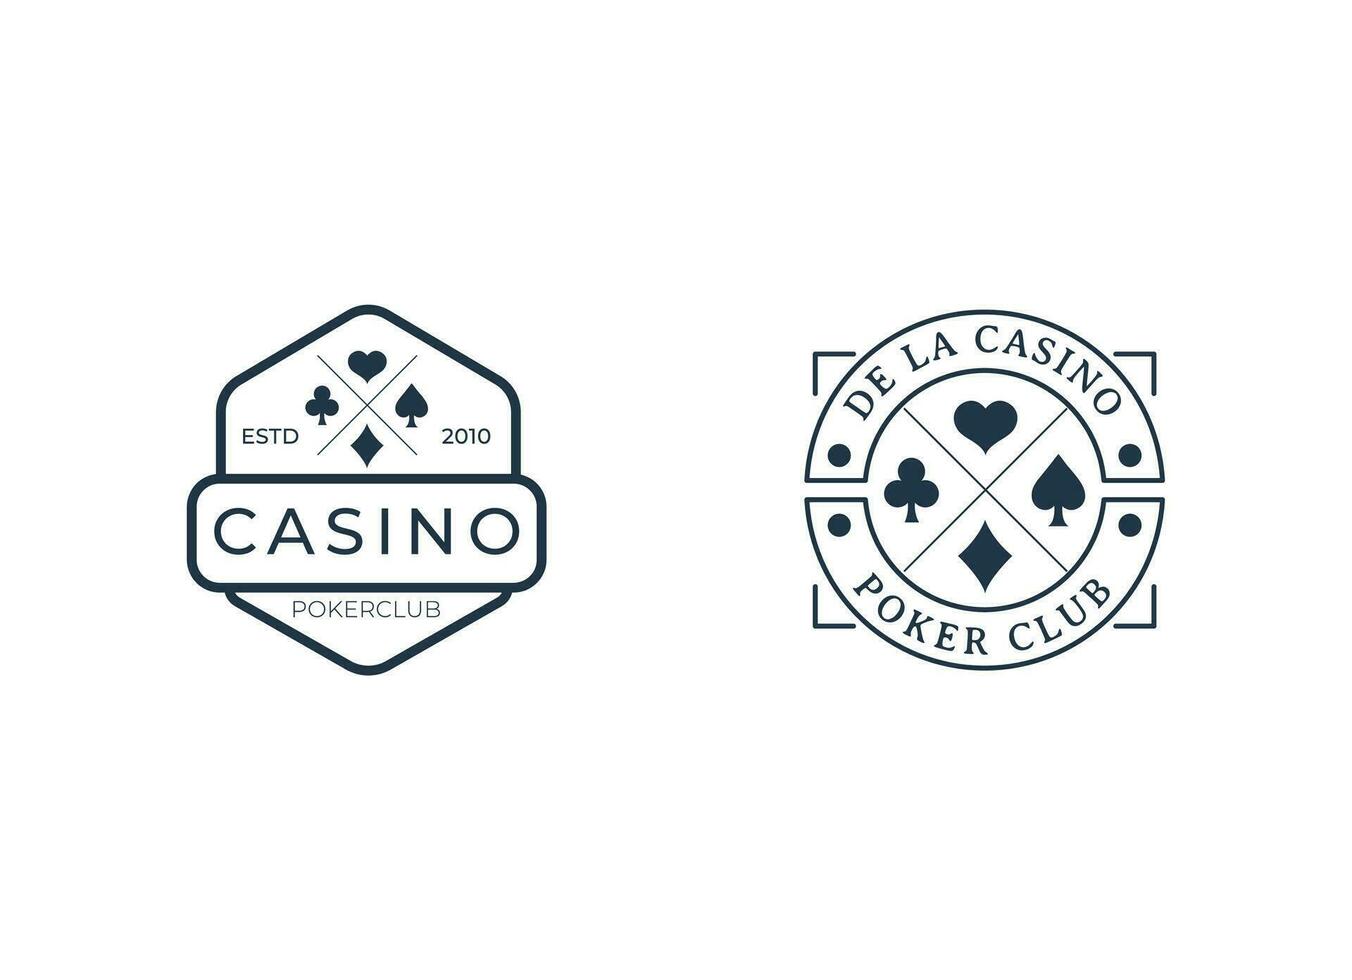 póker club emblema logo diseño modelo vector